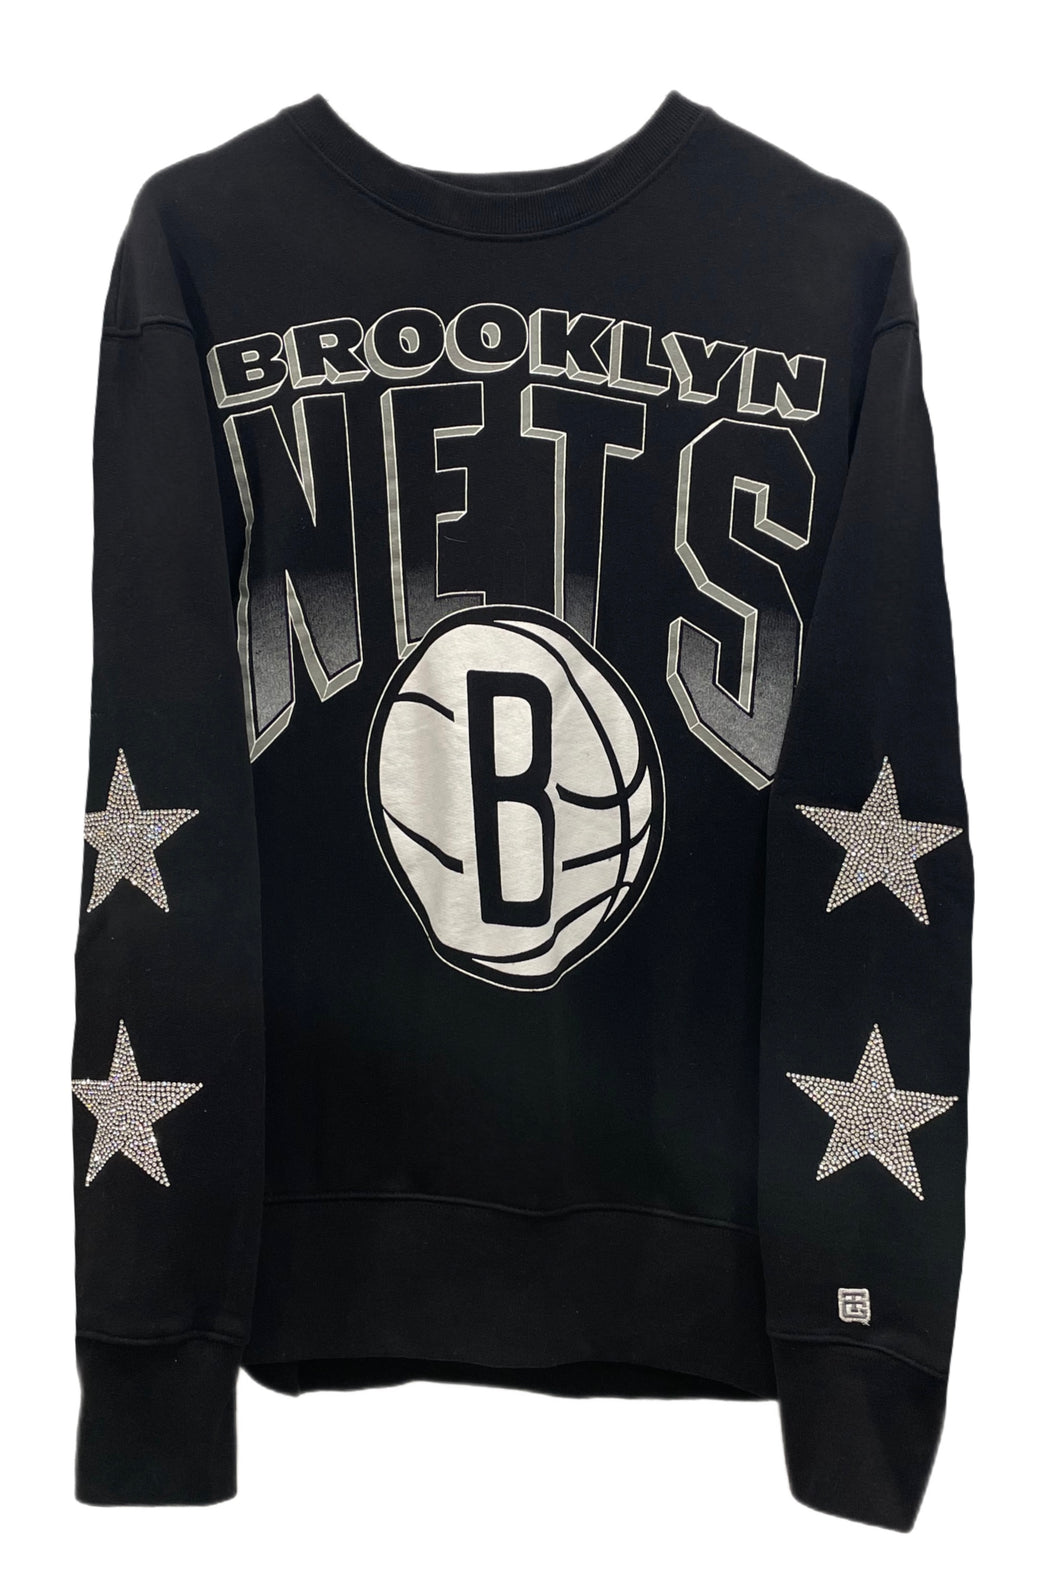 Brooklyn Nets, NBA One of a KIND Vintage Sweatshirt with Crystal Star Design